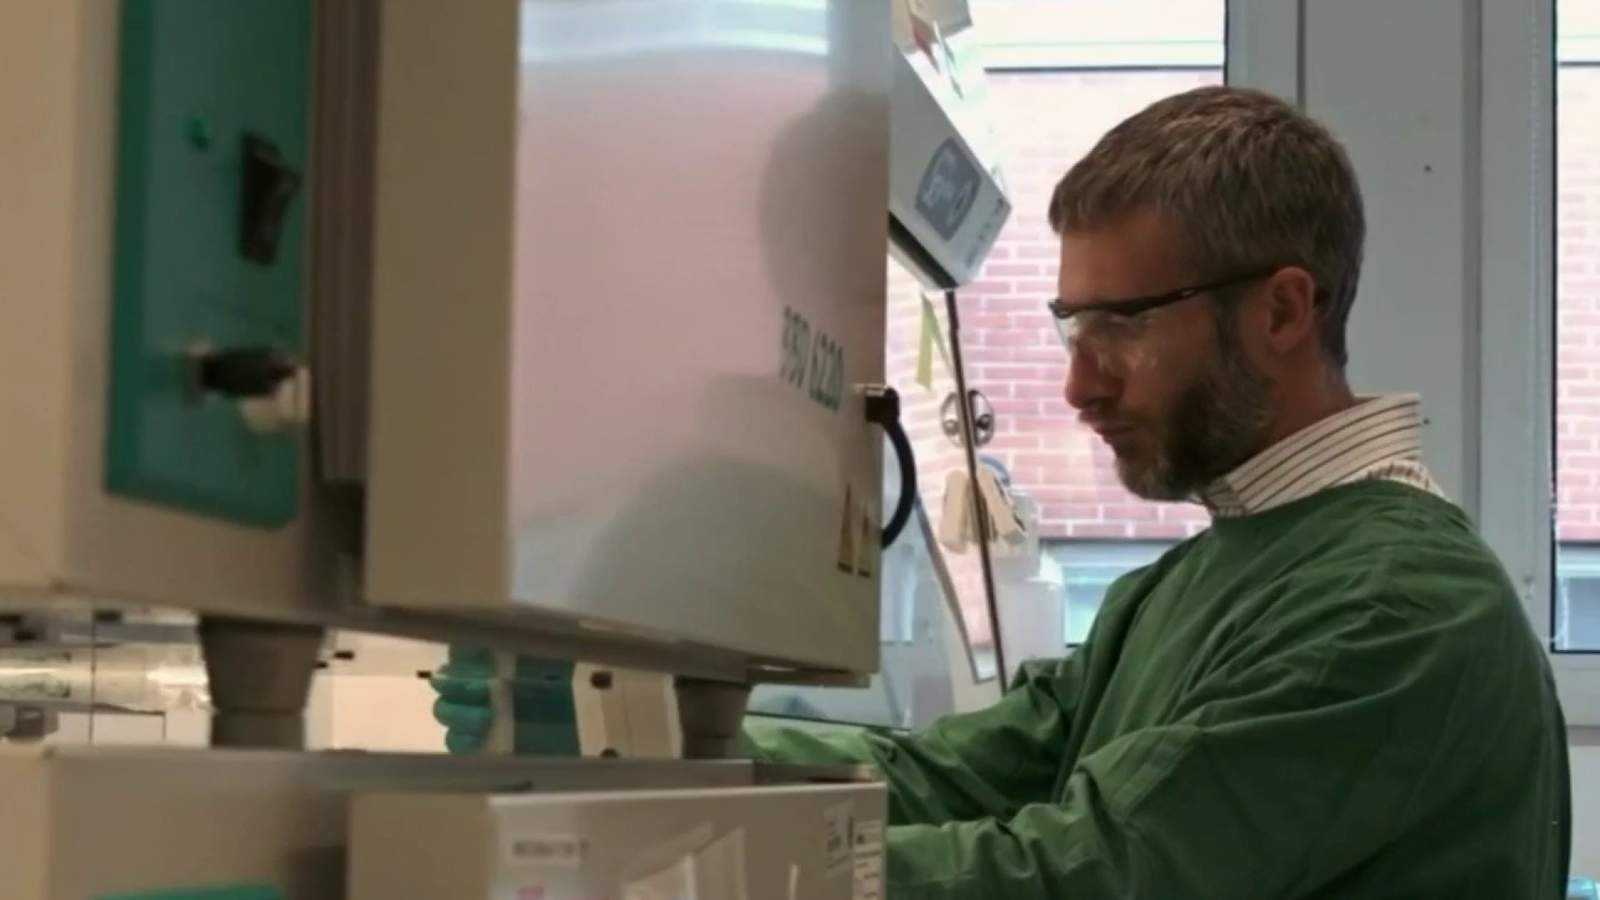 University of Michigan seeks volunteers for COVID-19 vaccine testing